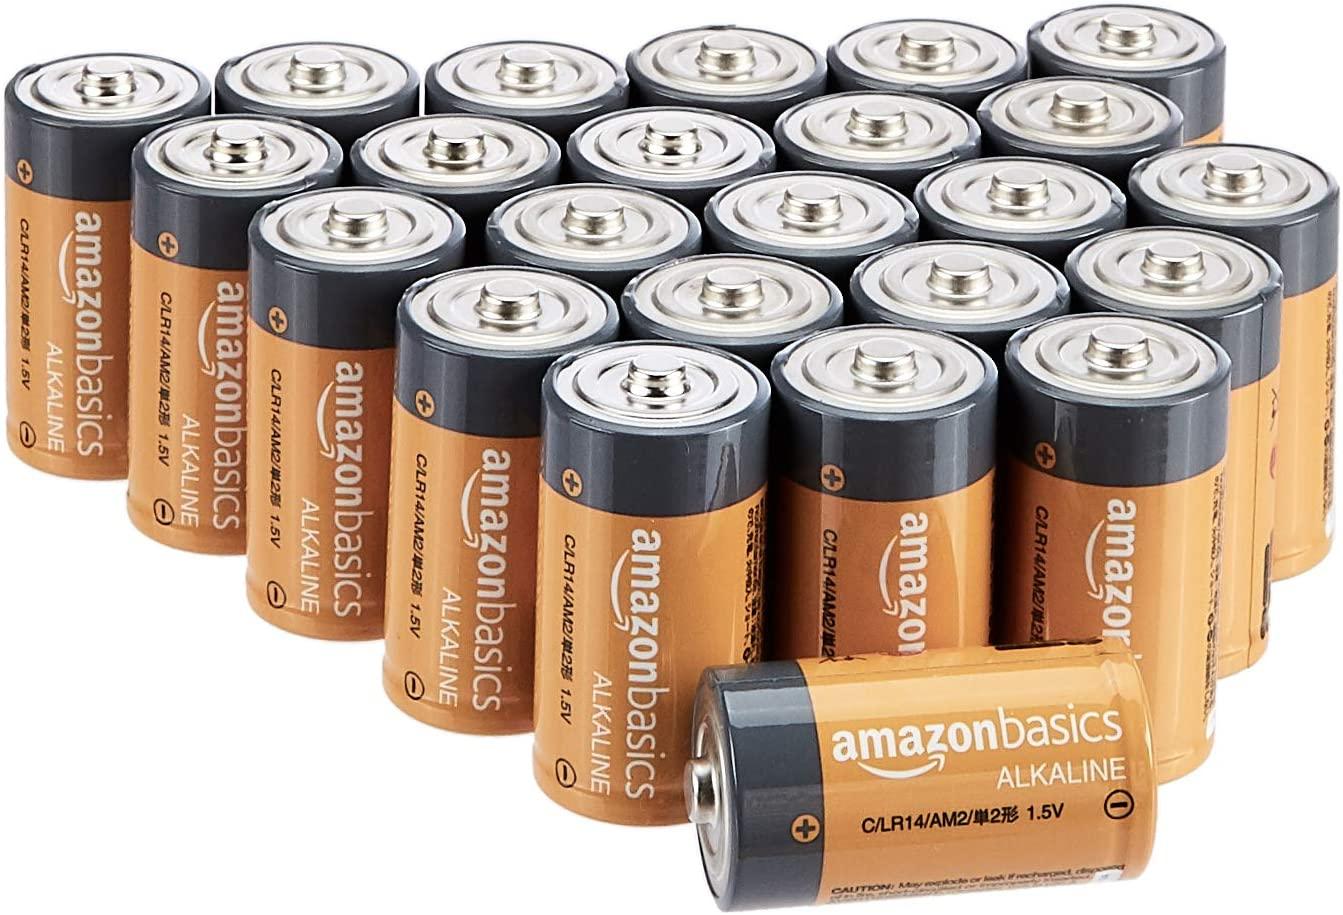 Amazon Basics C Cell Alkaline Batteries 24 Pack for $7.41 Shipped